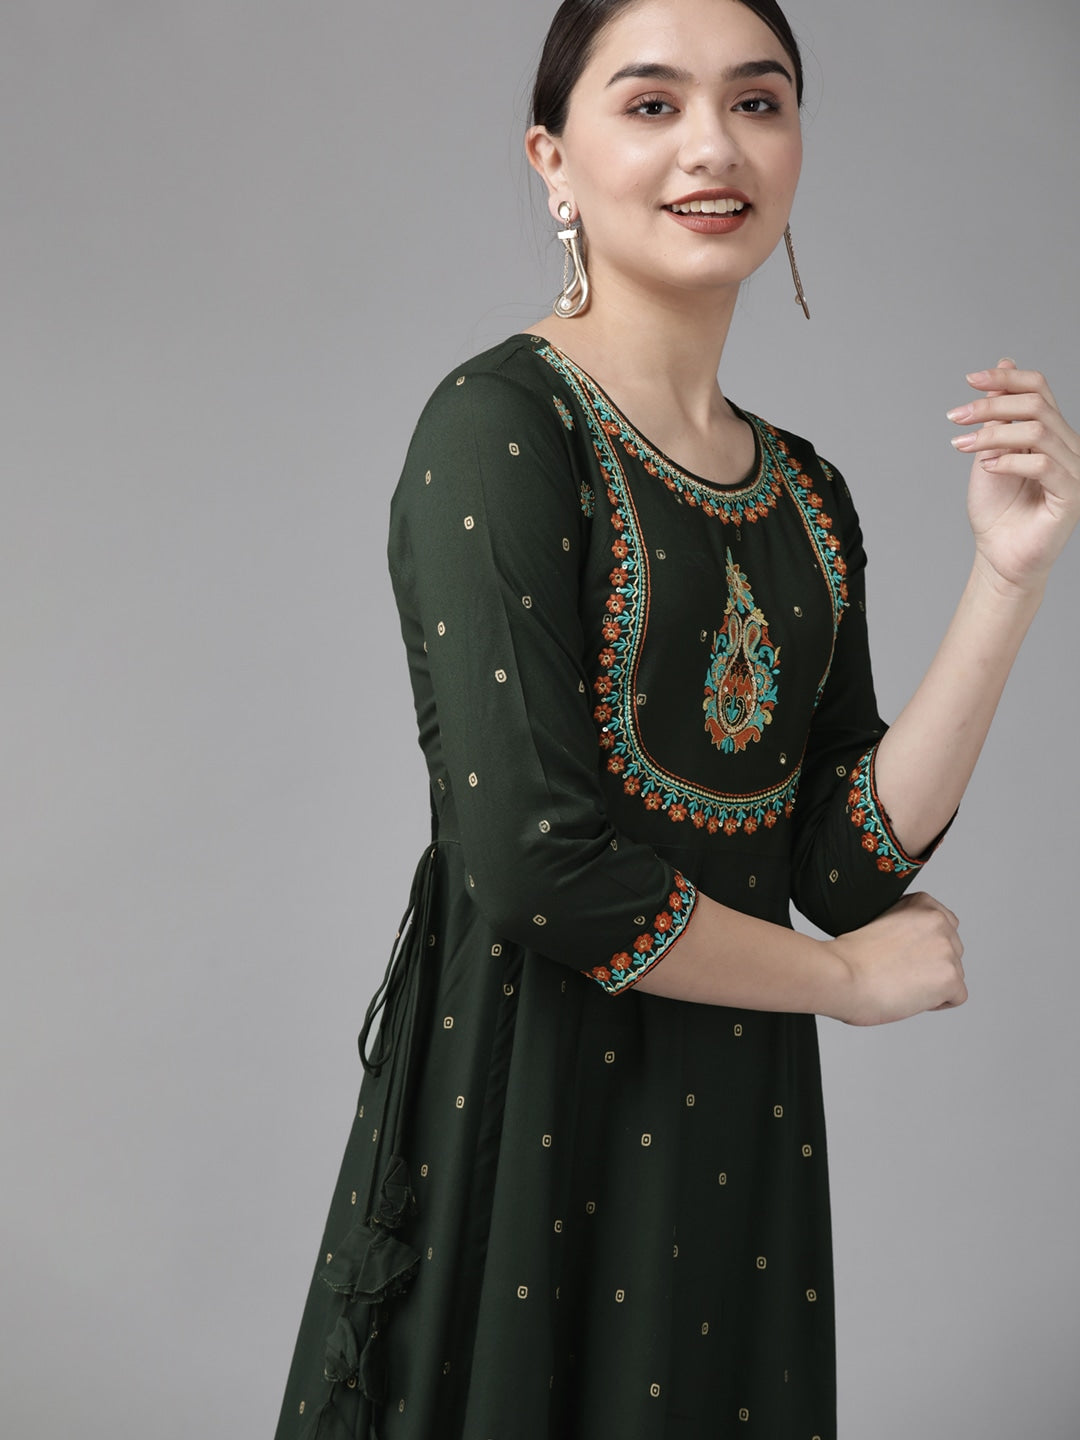 Green & Golden Printed Dress-Yufta Store-4101DRSGRS